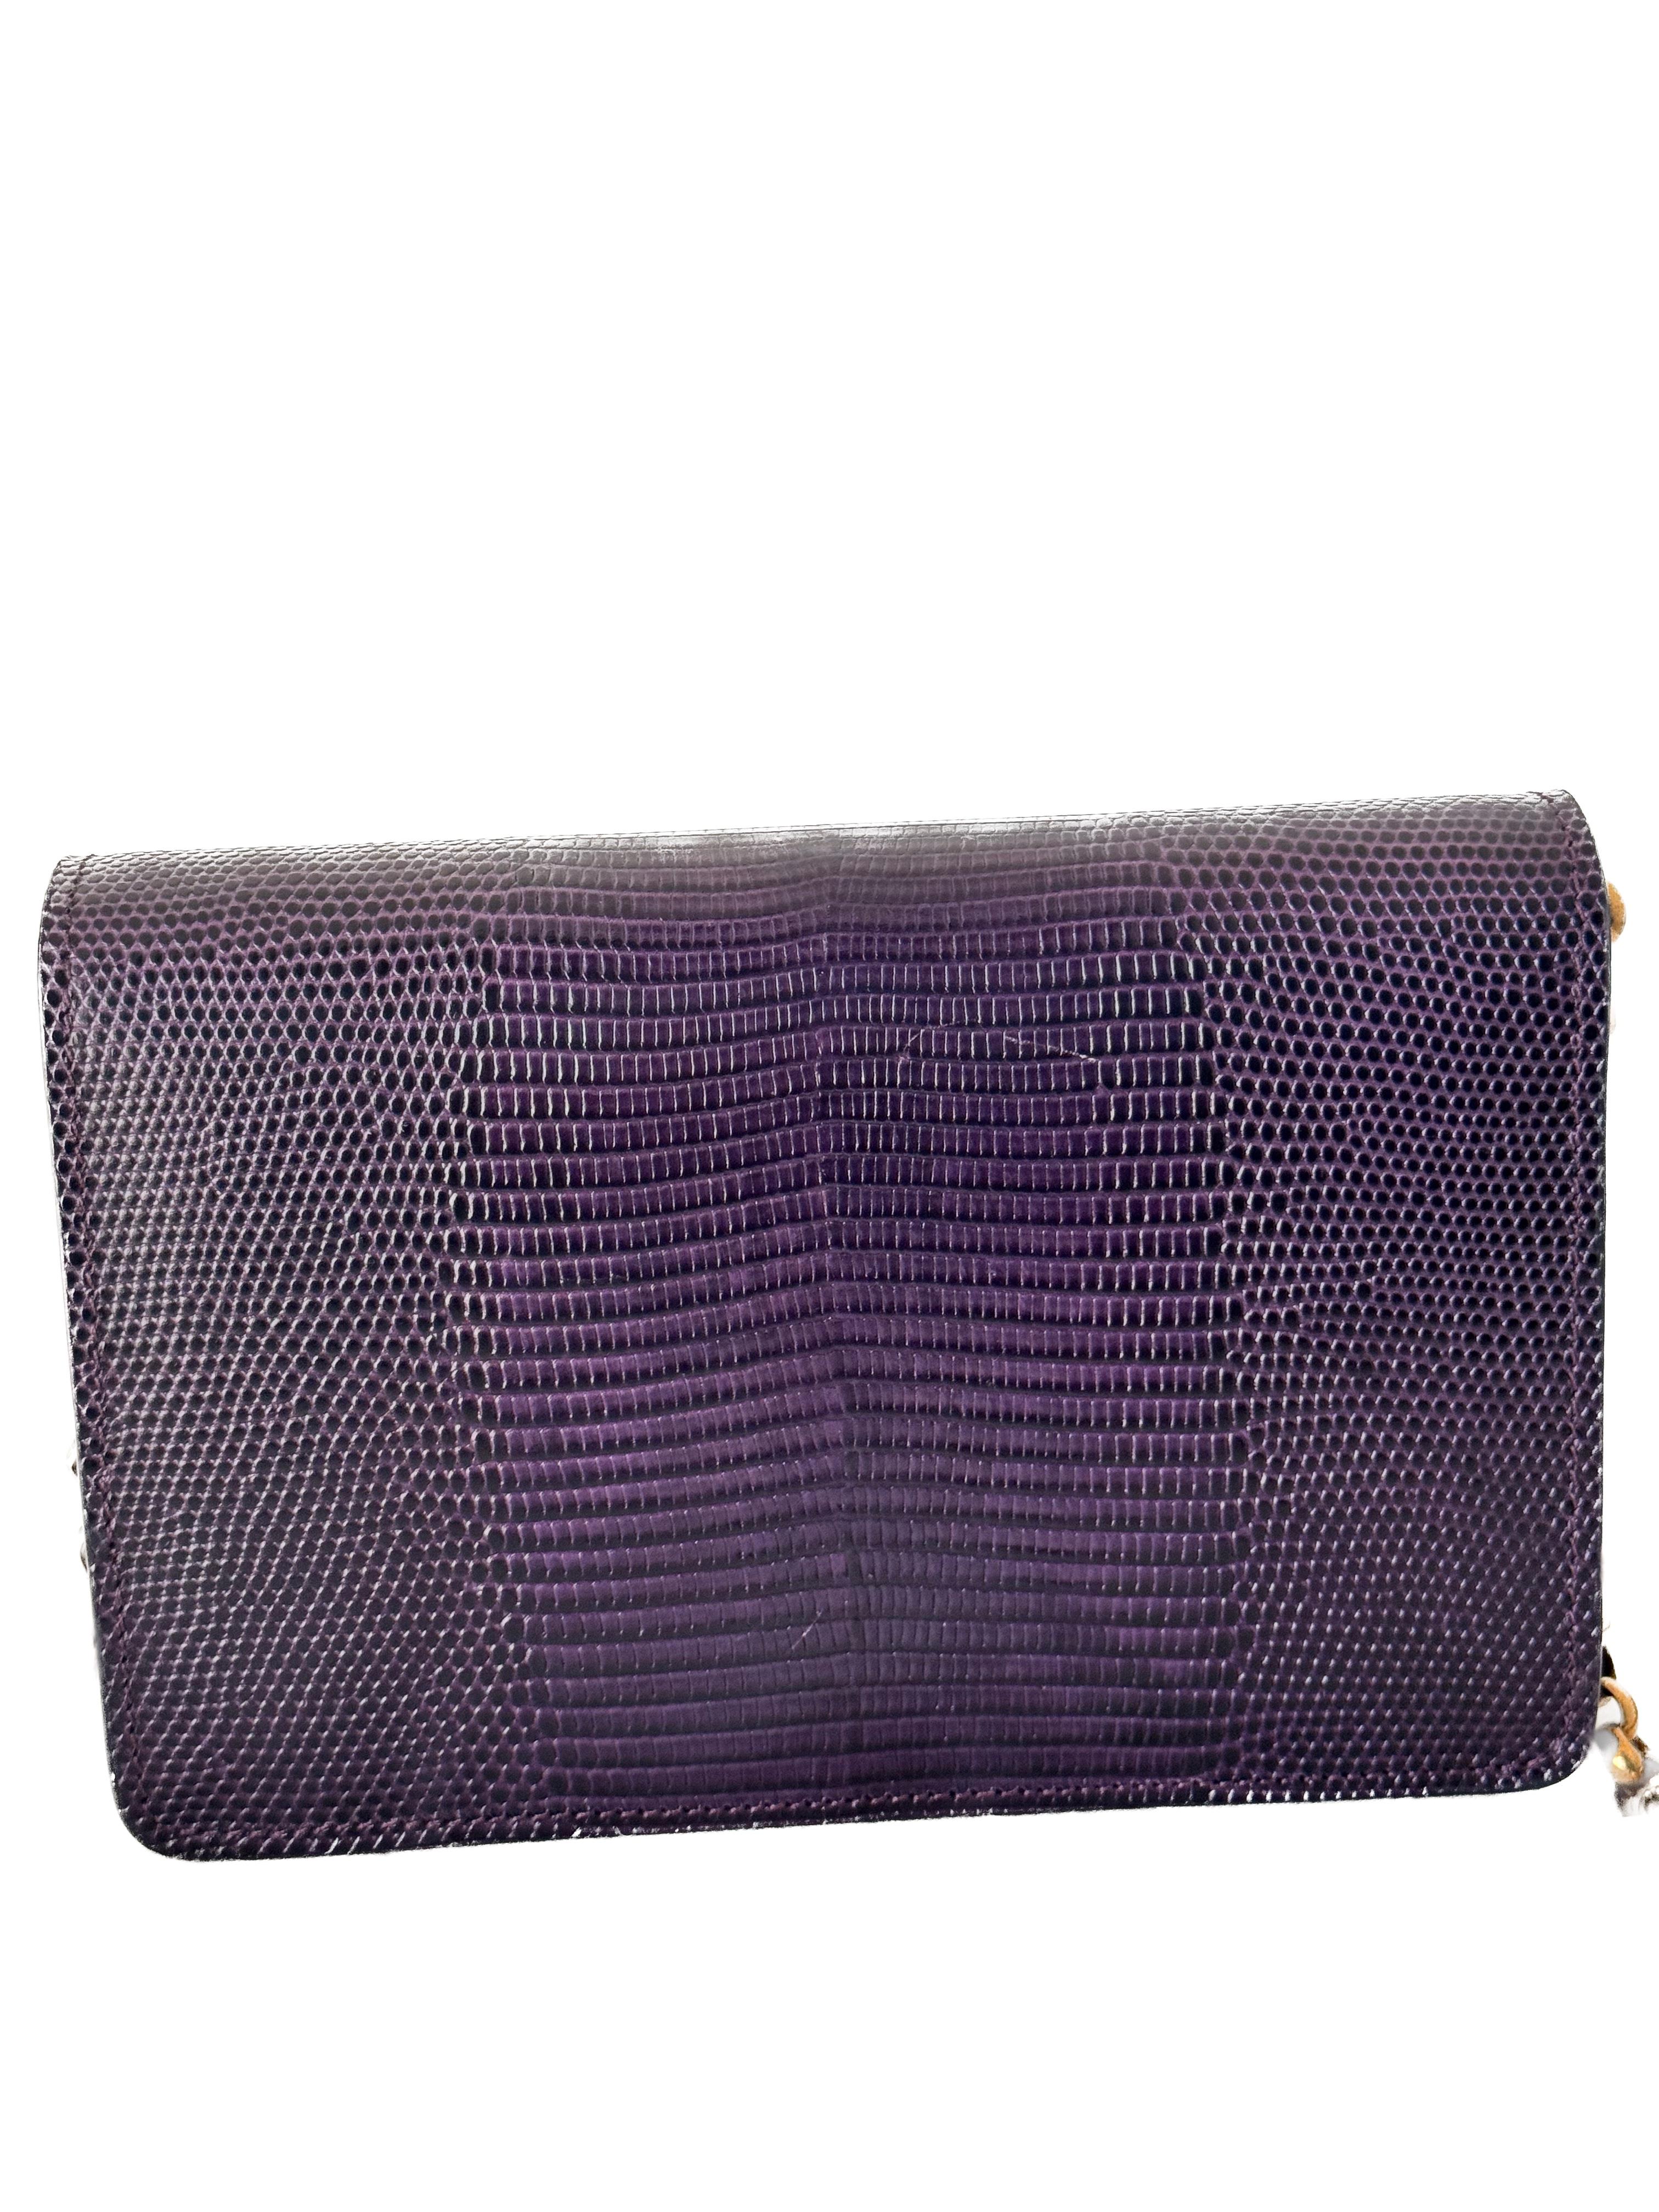 Dolce & Gabbana purple  Lizard evening Bag  2